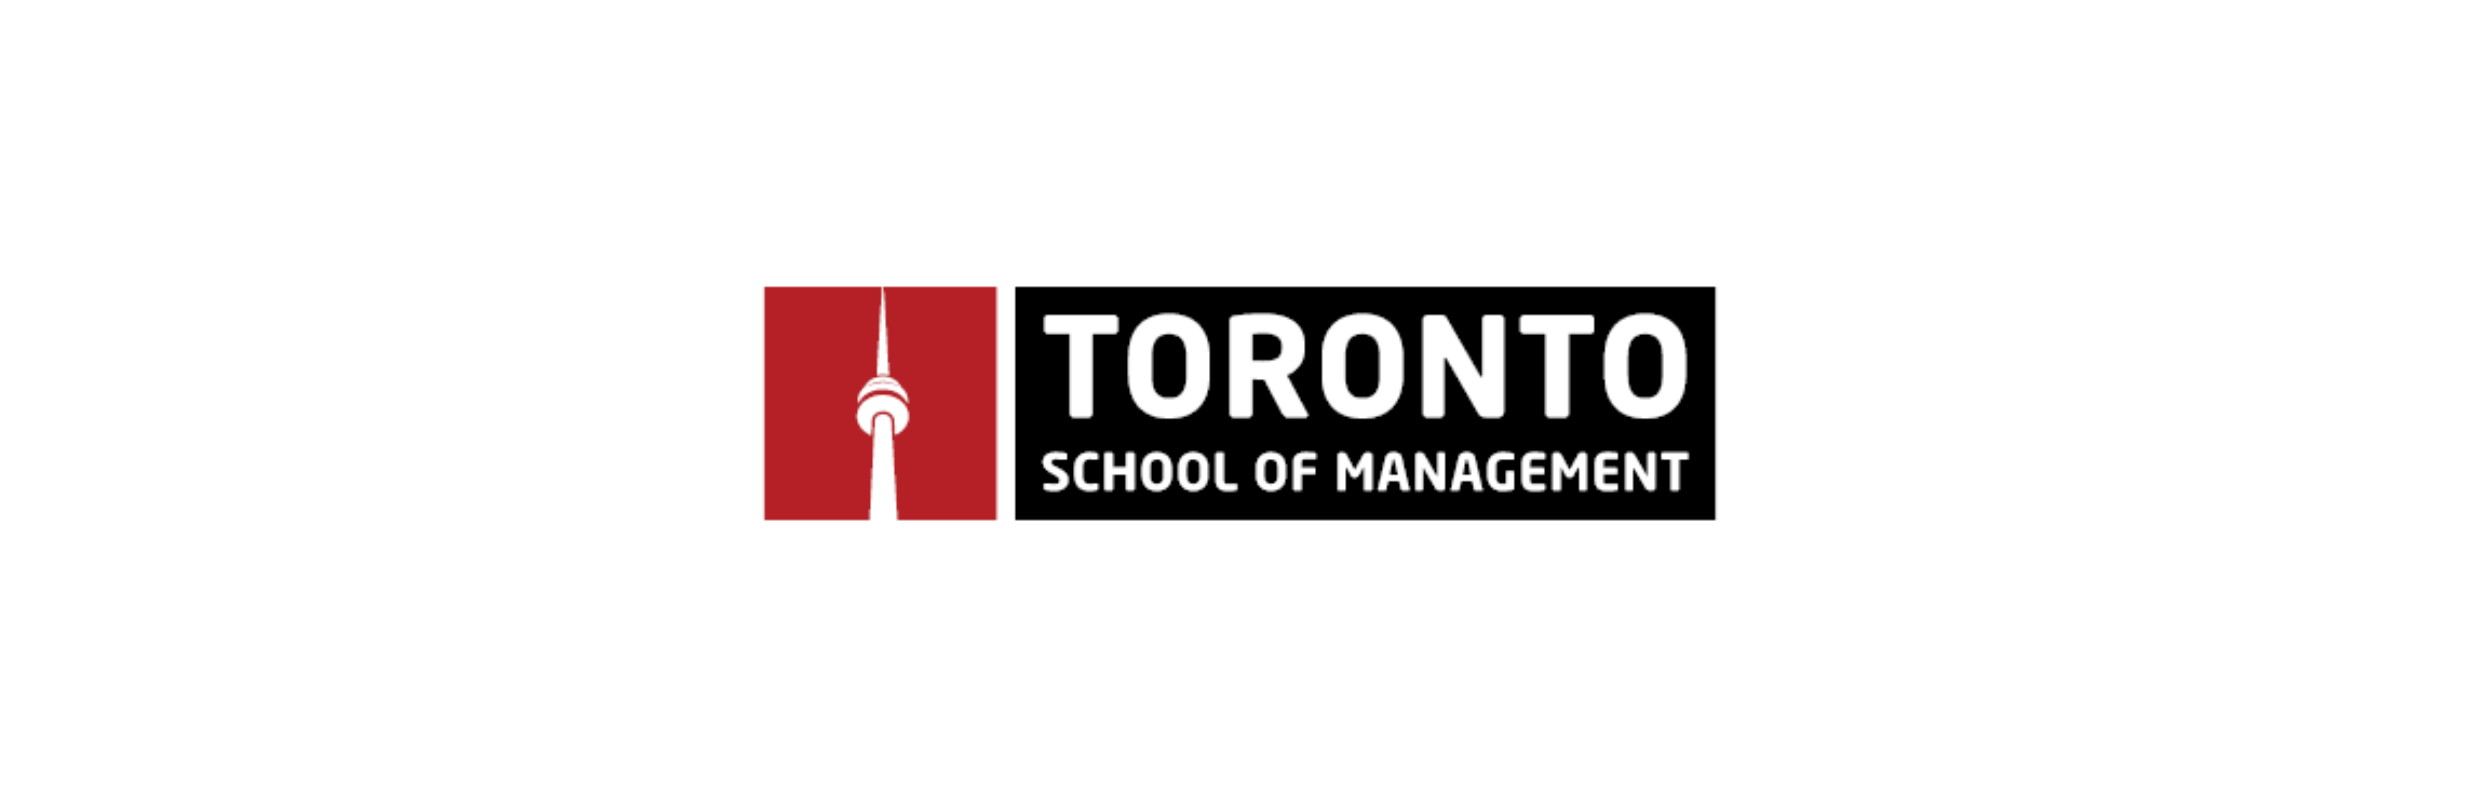 Toronto School of management